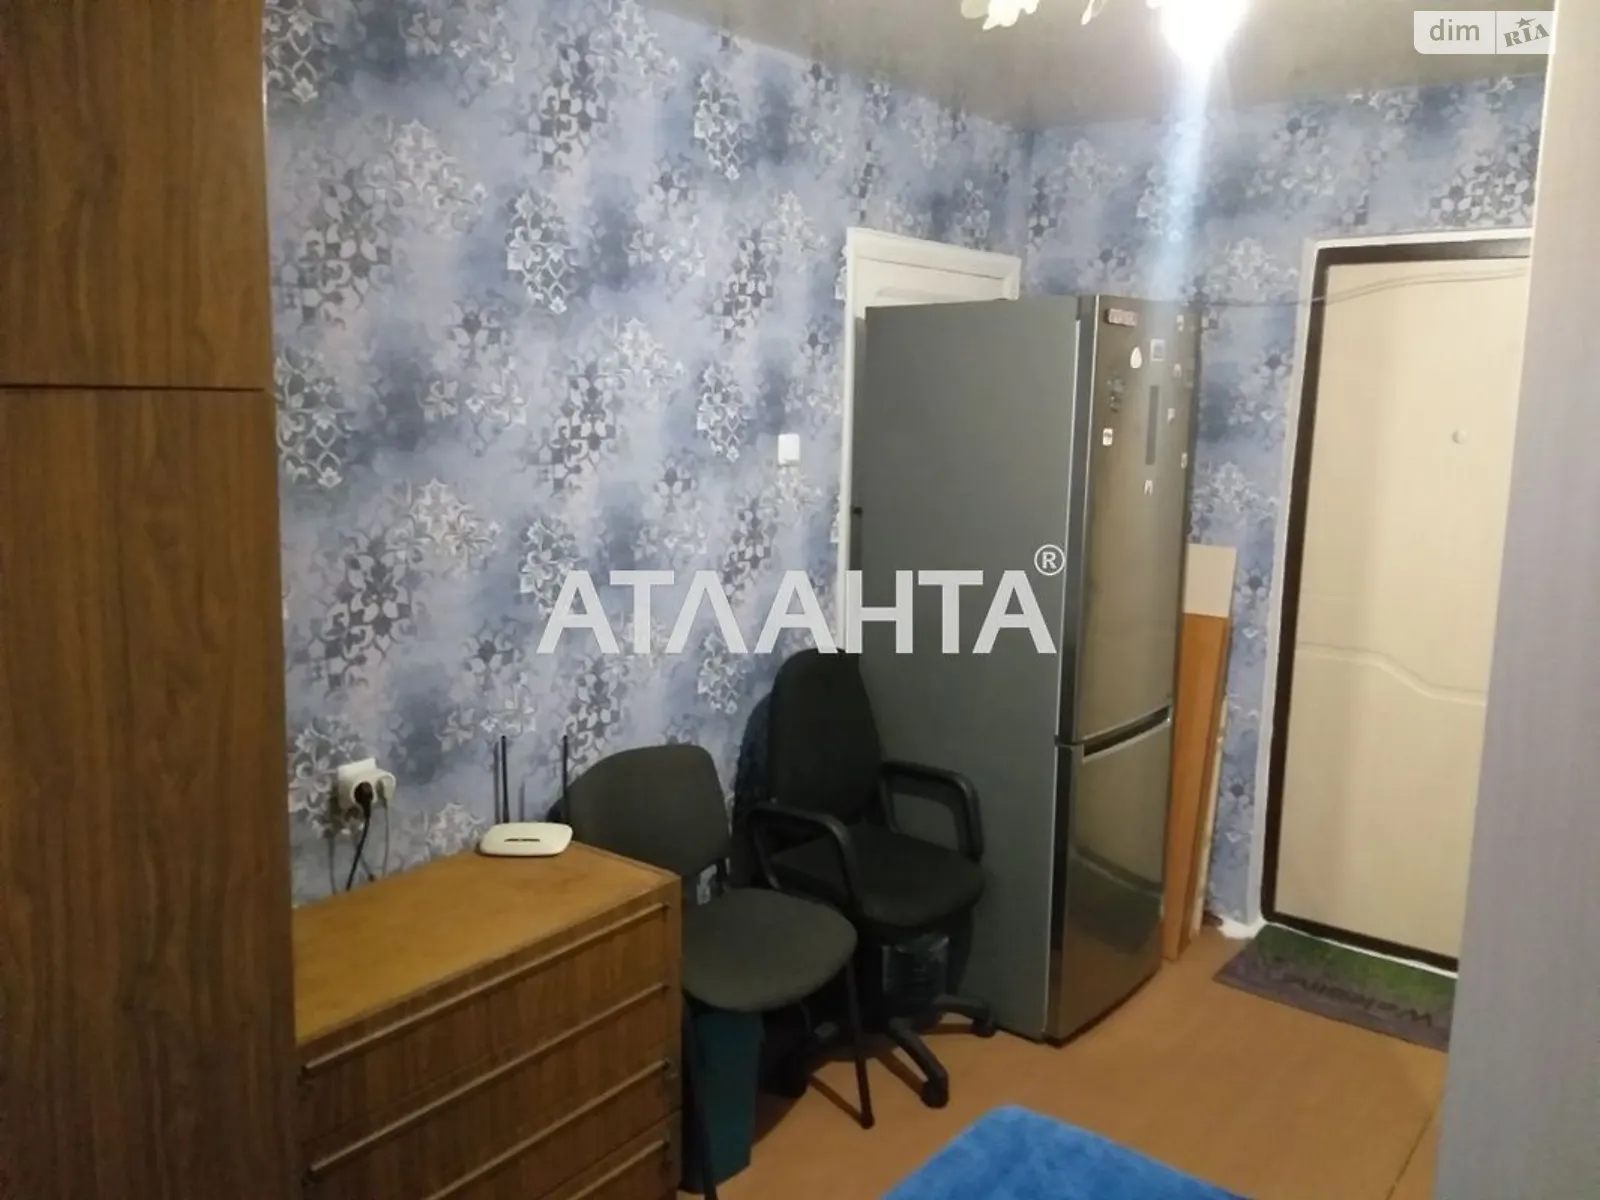 Продается комната 22 кв. м в Одессе, цена: 20000 $ - фото 1